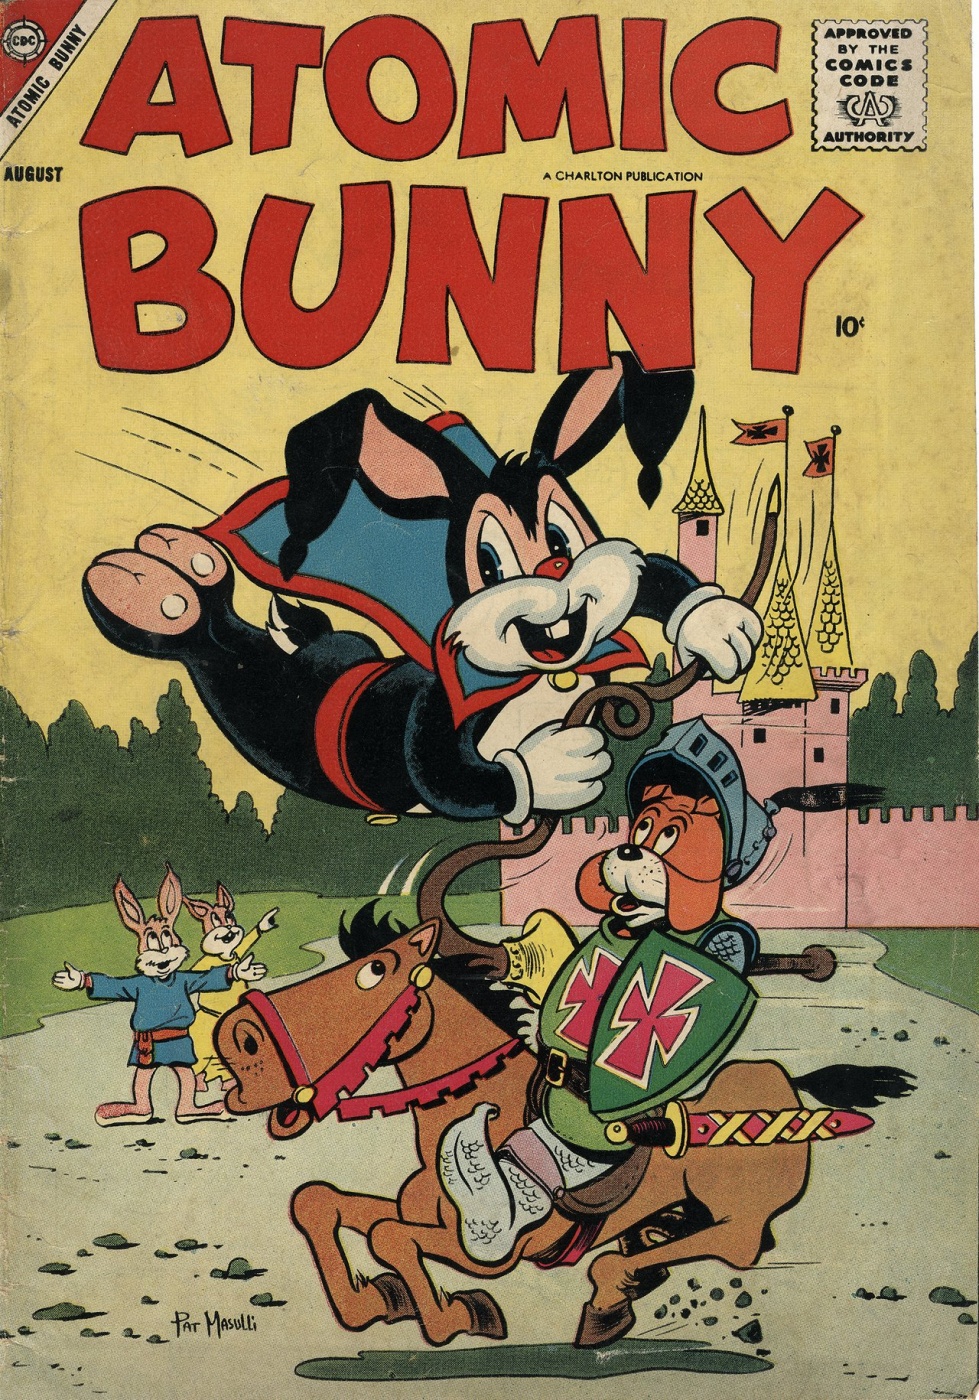 Funny Comic Strips: Atomic Bunny #1